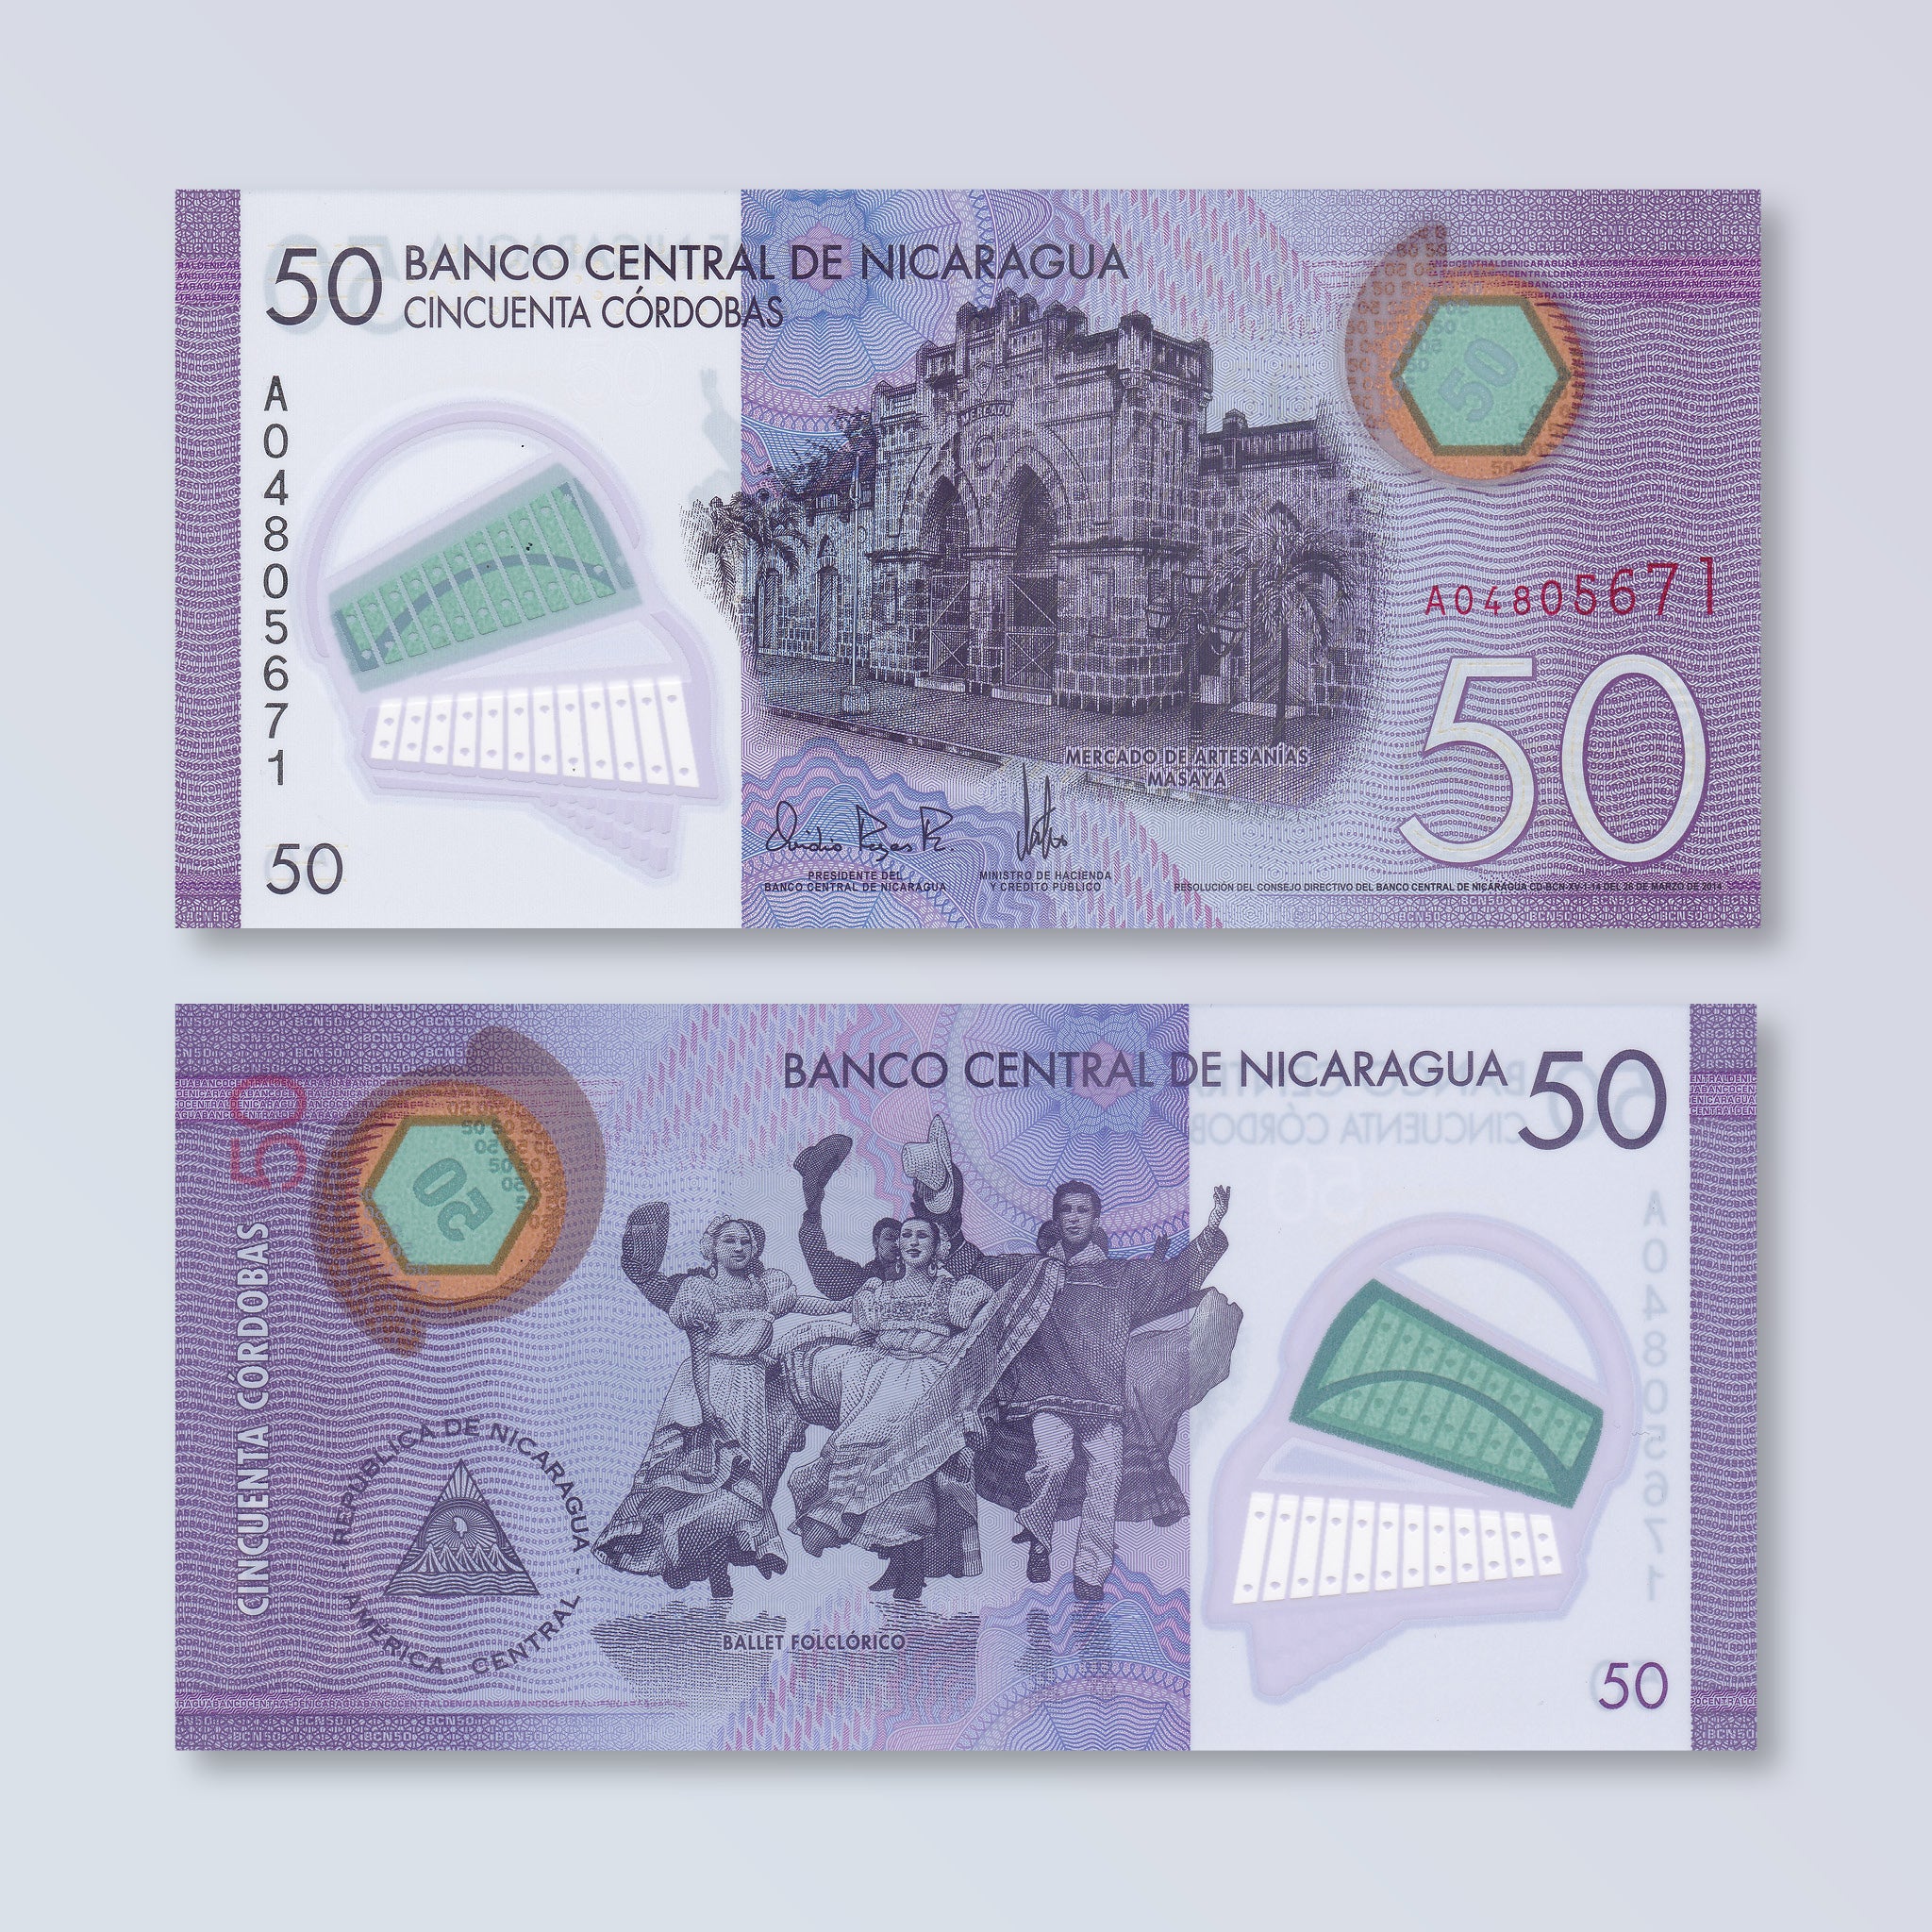 Nicaragua 50 Córdobas, 2014, B508a, P211a, UNC - Robert's World Money - World Banknotes